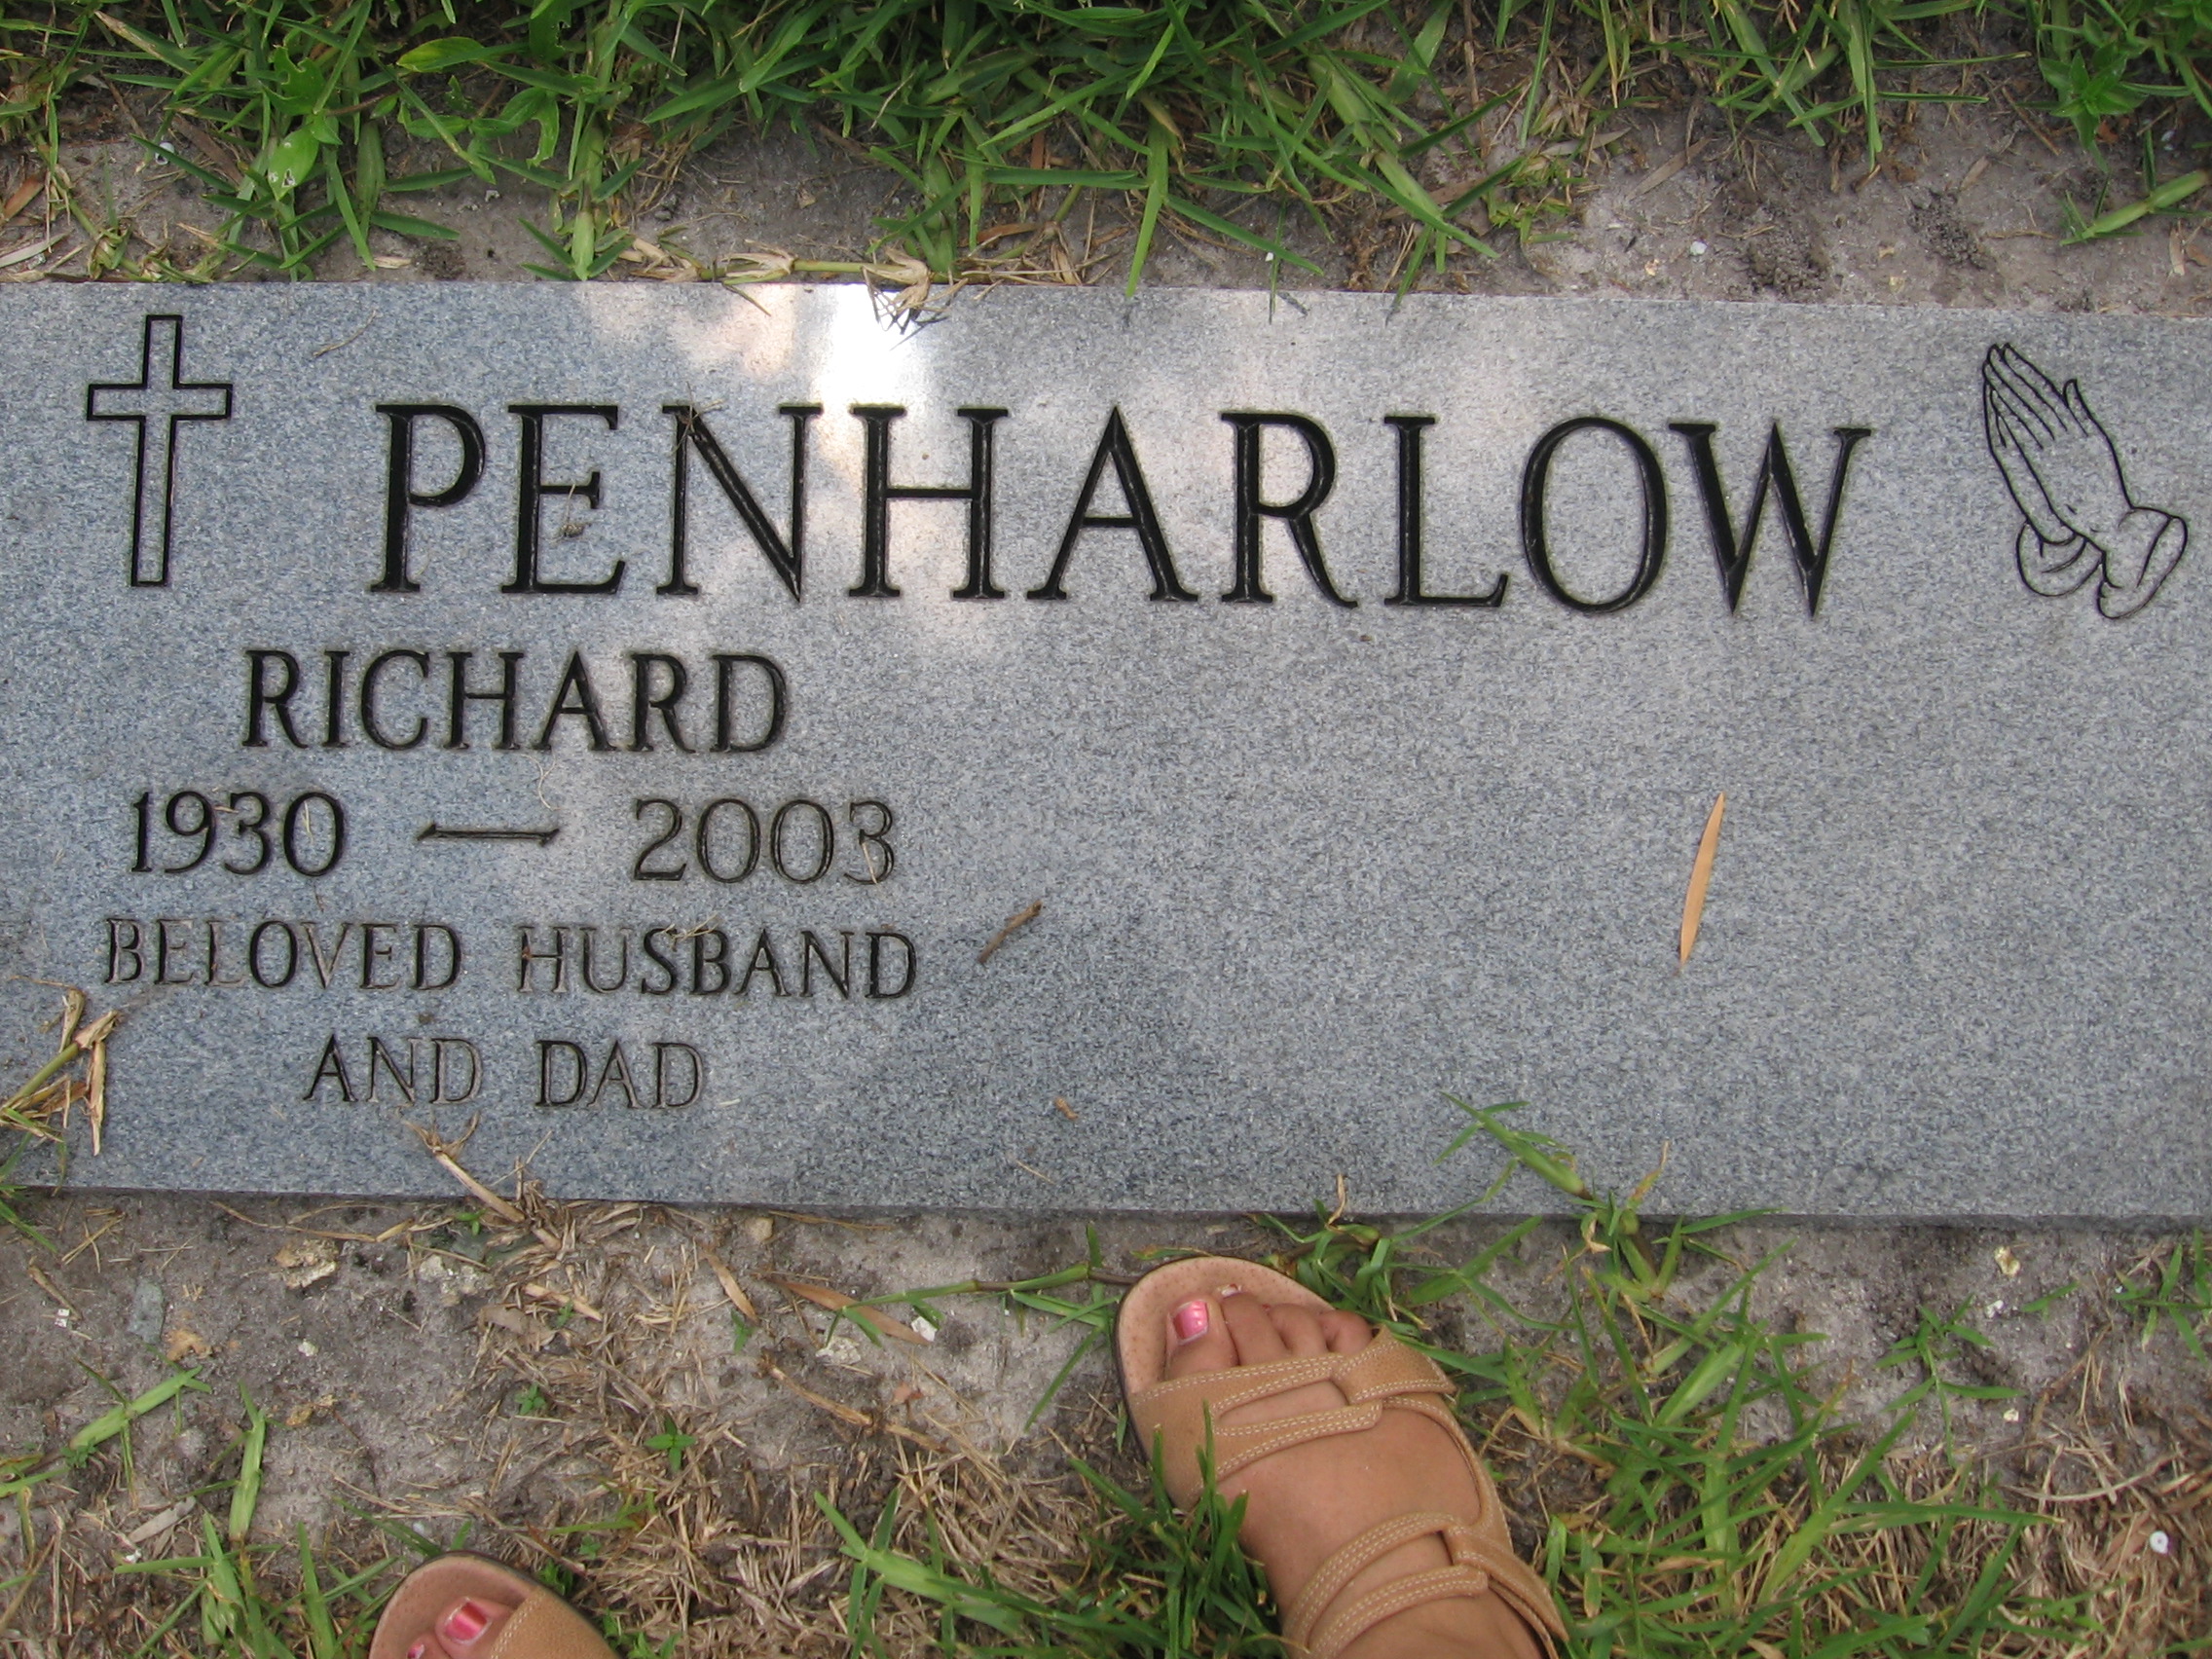 Richard Penharlow